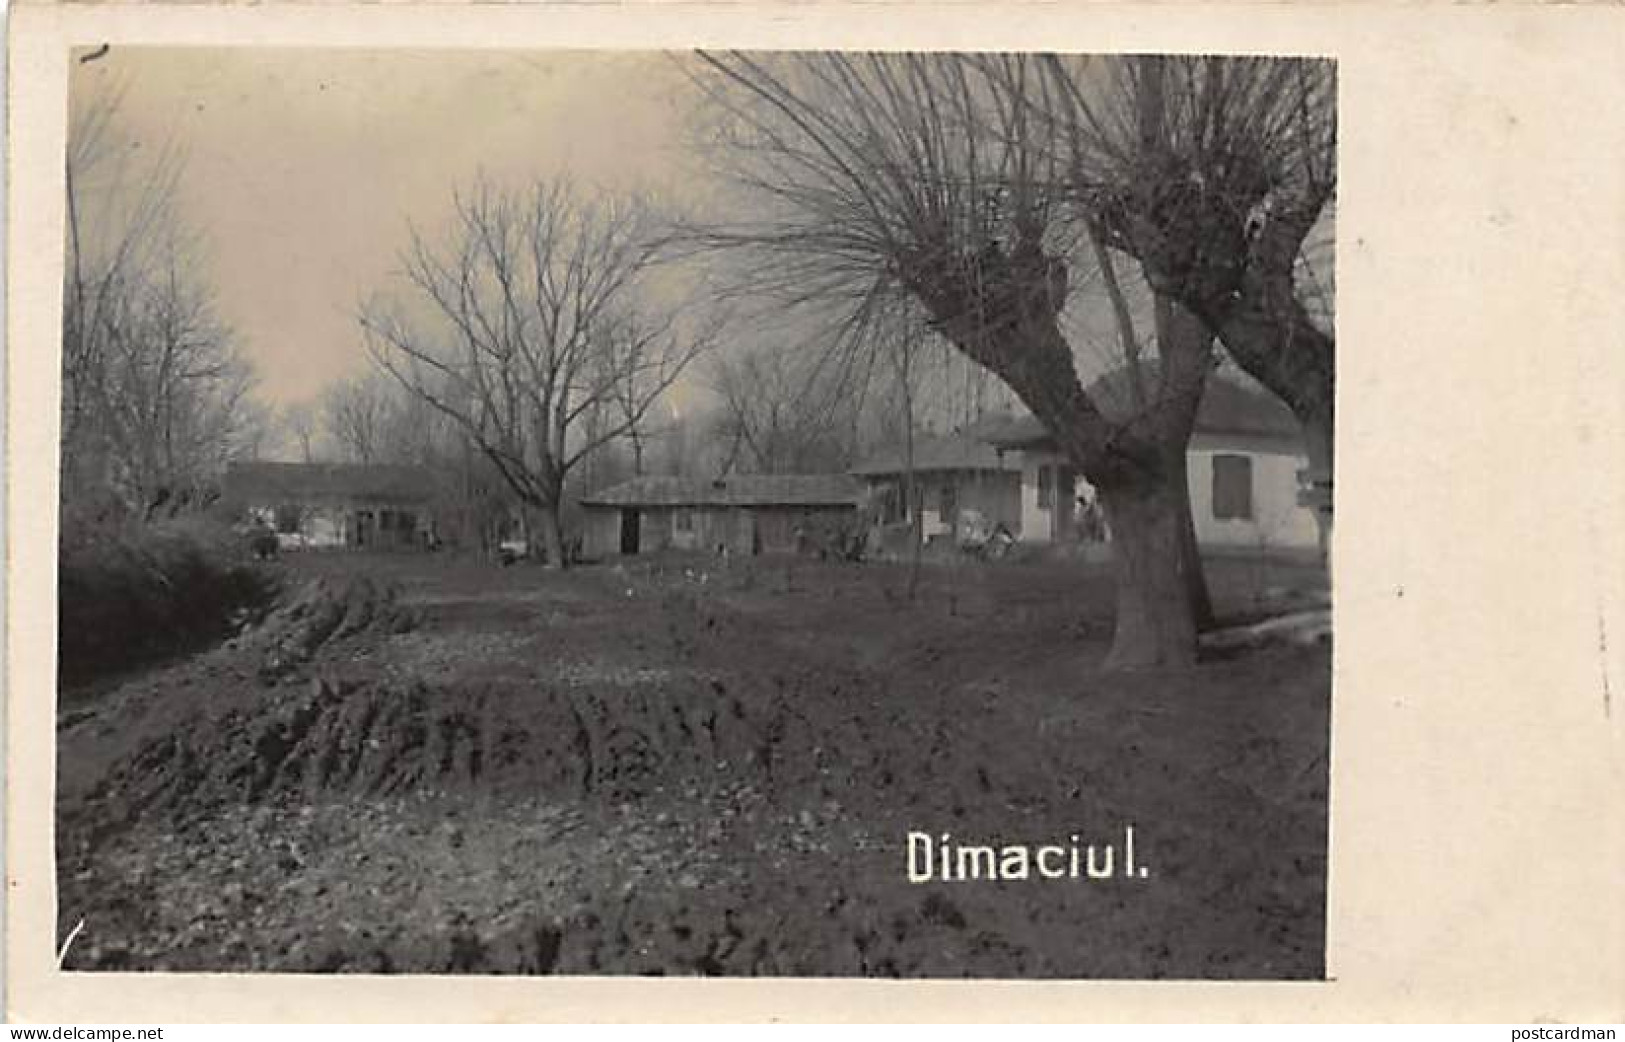 Romania - Dimaciu (Comuna Suraia Dimaciul During German Occupation (World War One) - REAL PHOTO - Romania